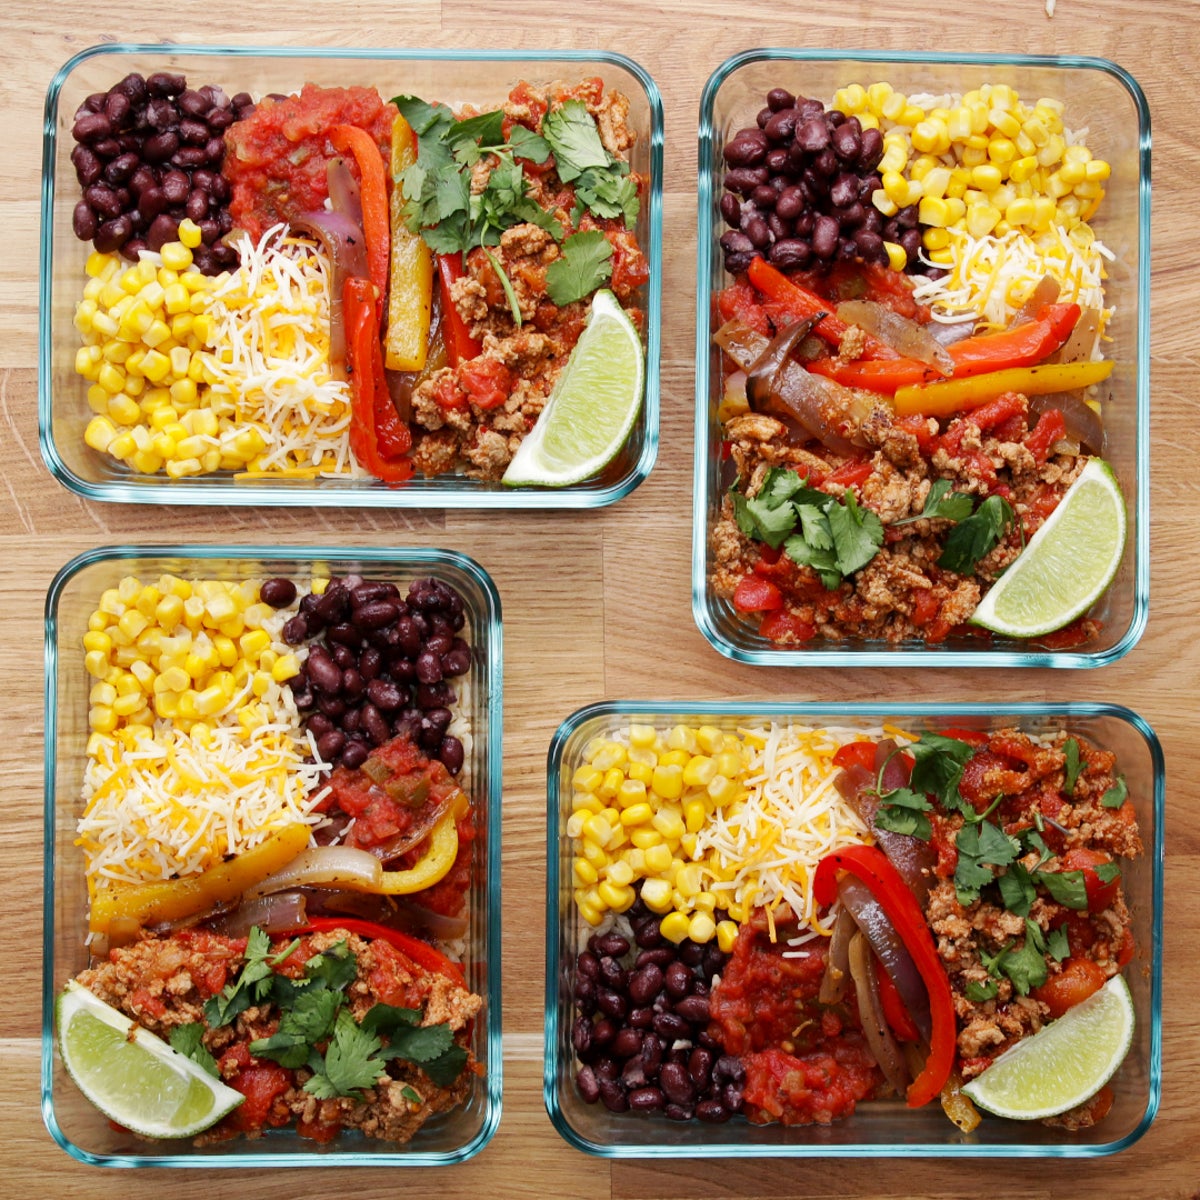 Meal Prep Taco Salad Bowls - Eat. Lift. Play. Repeat.